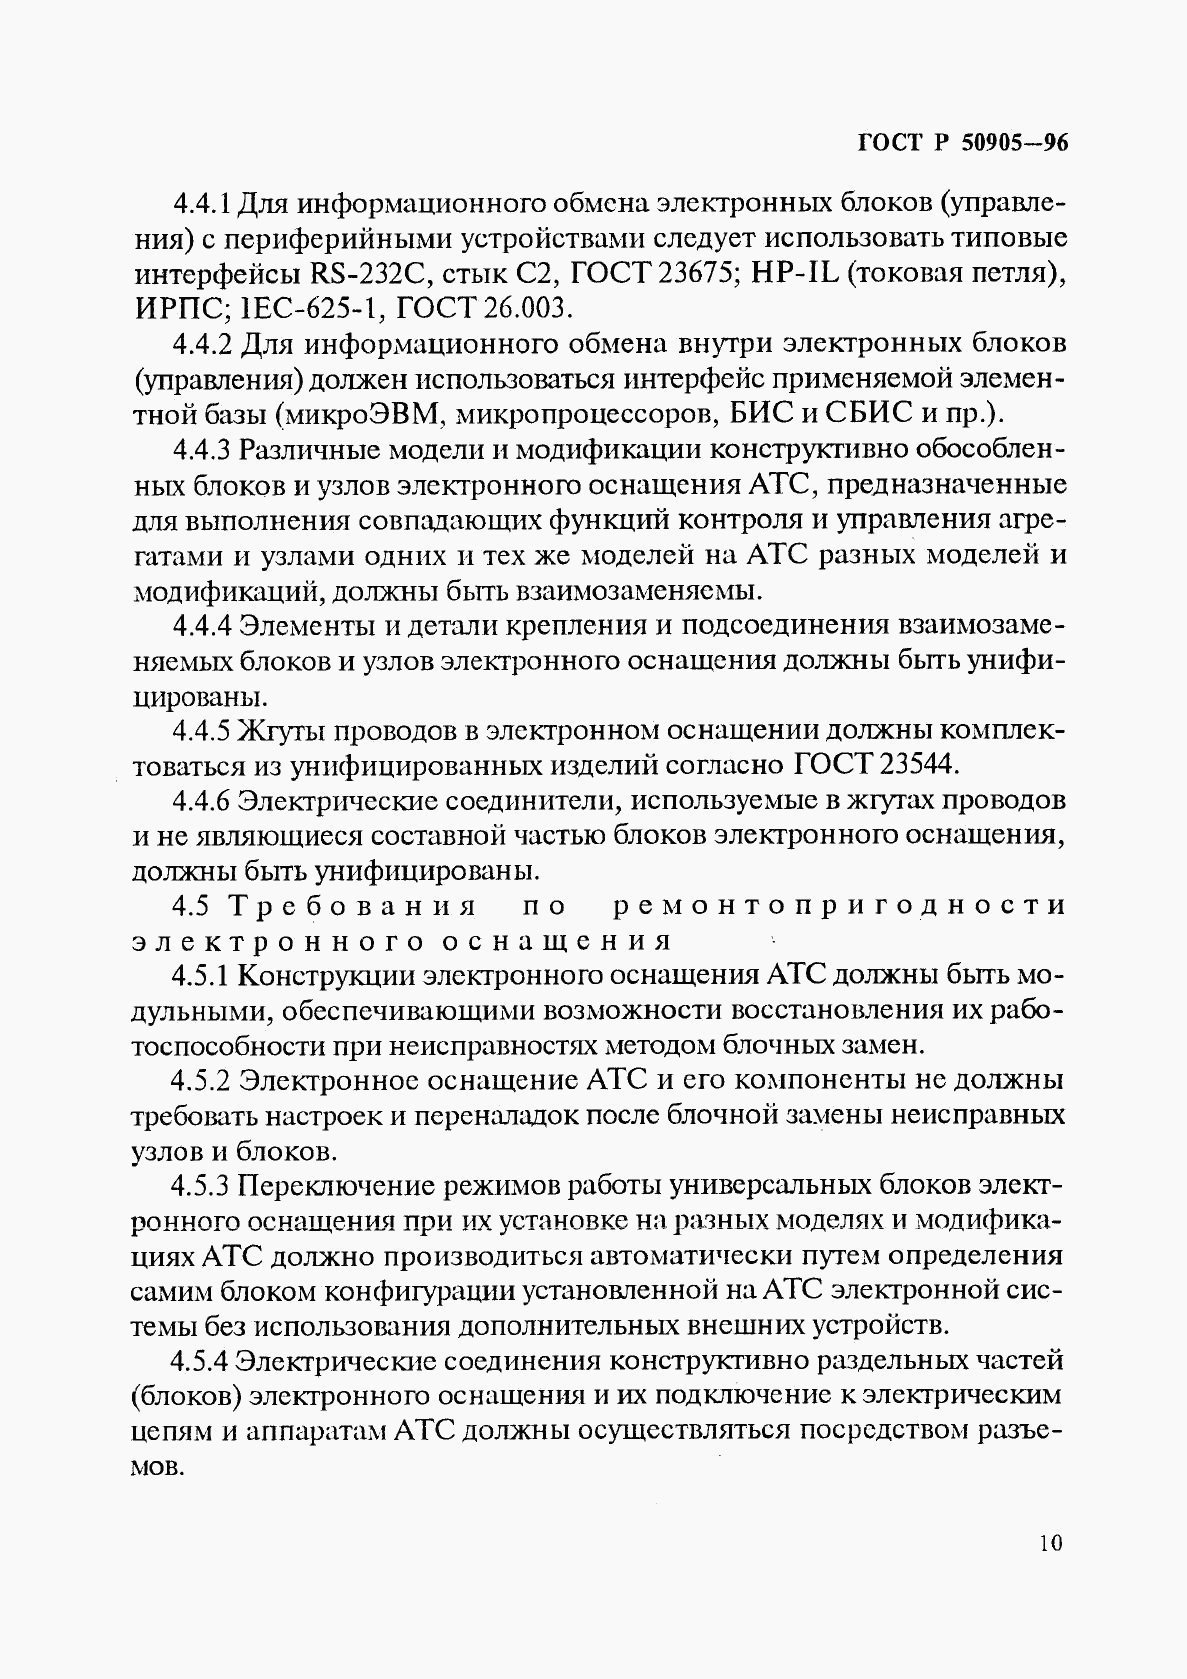 ГОСТ Р 50905-96, страница 13